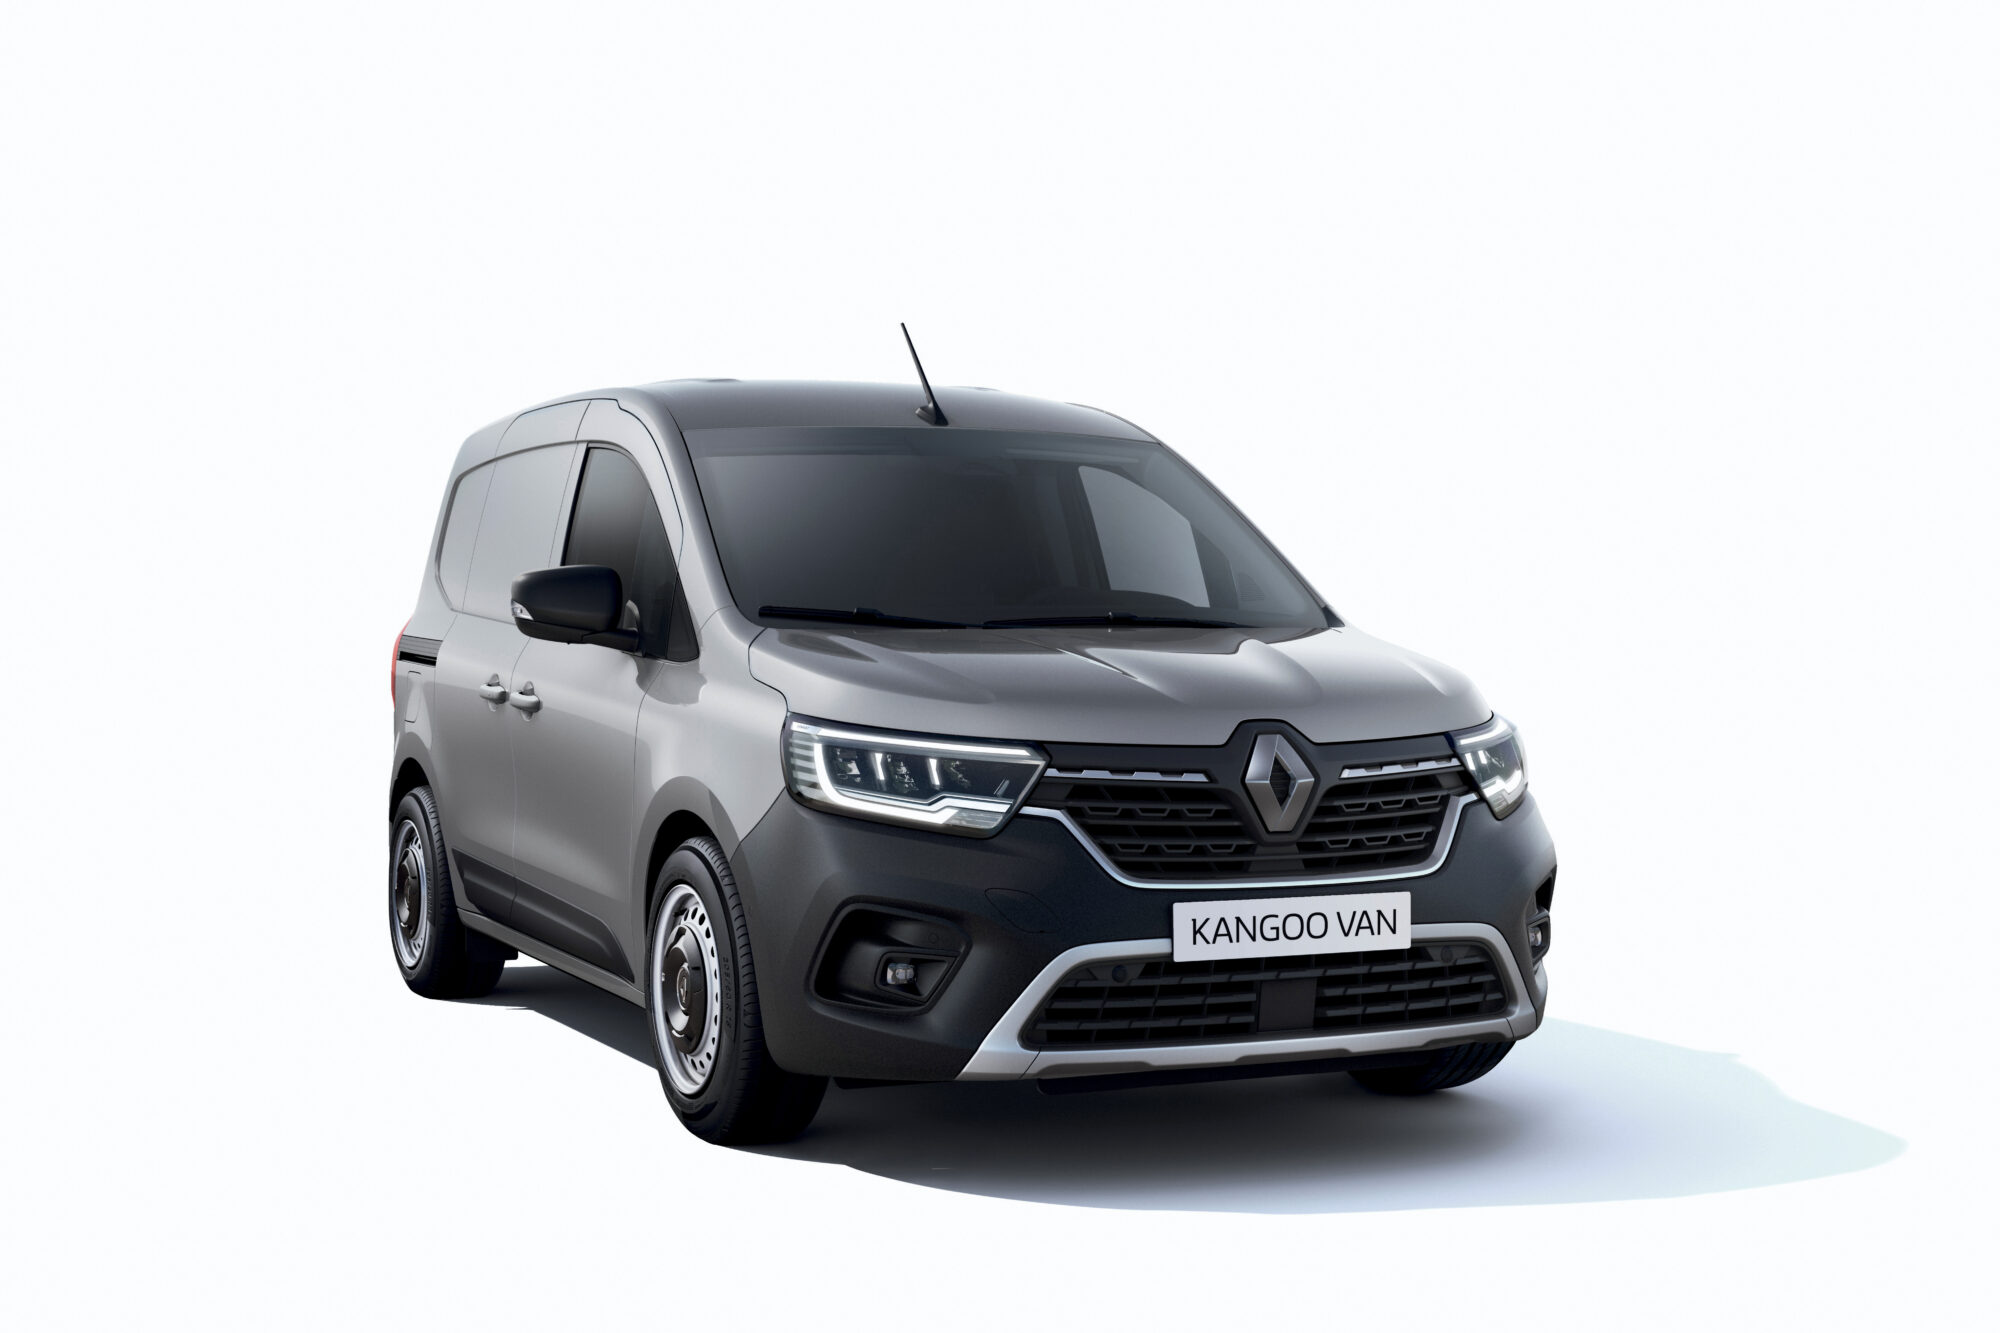 2021 - Nouveau Renault Kangoo Van en studio